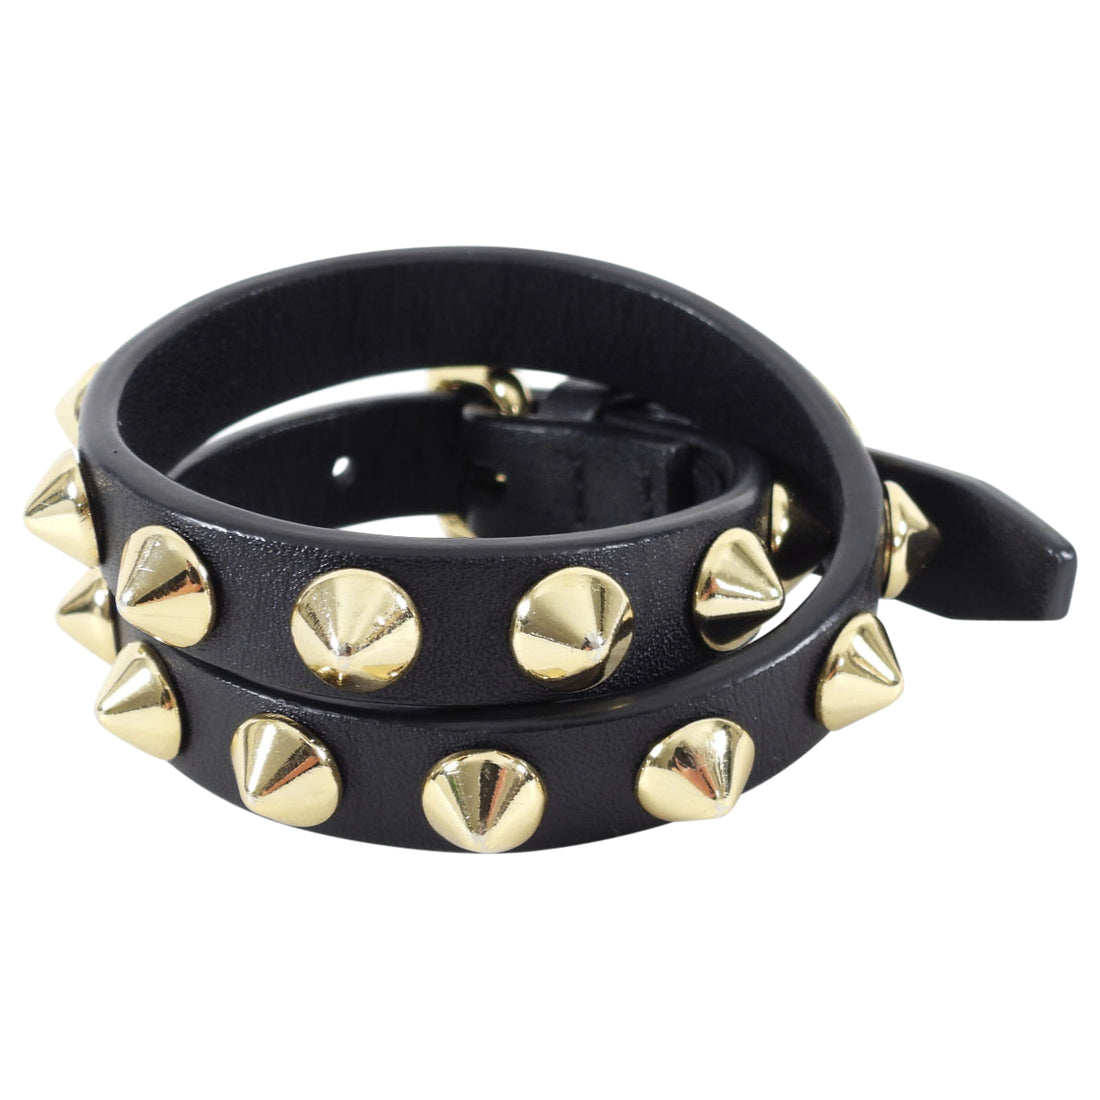 Givenchy Black Leather and Gold Stud Bracelet